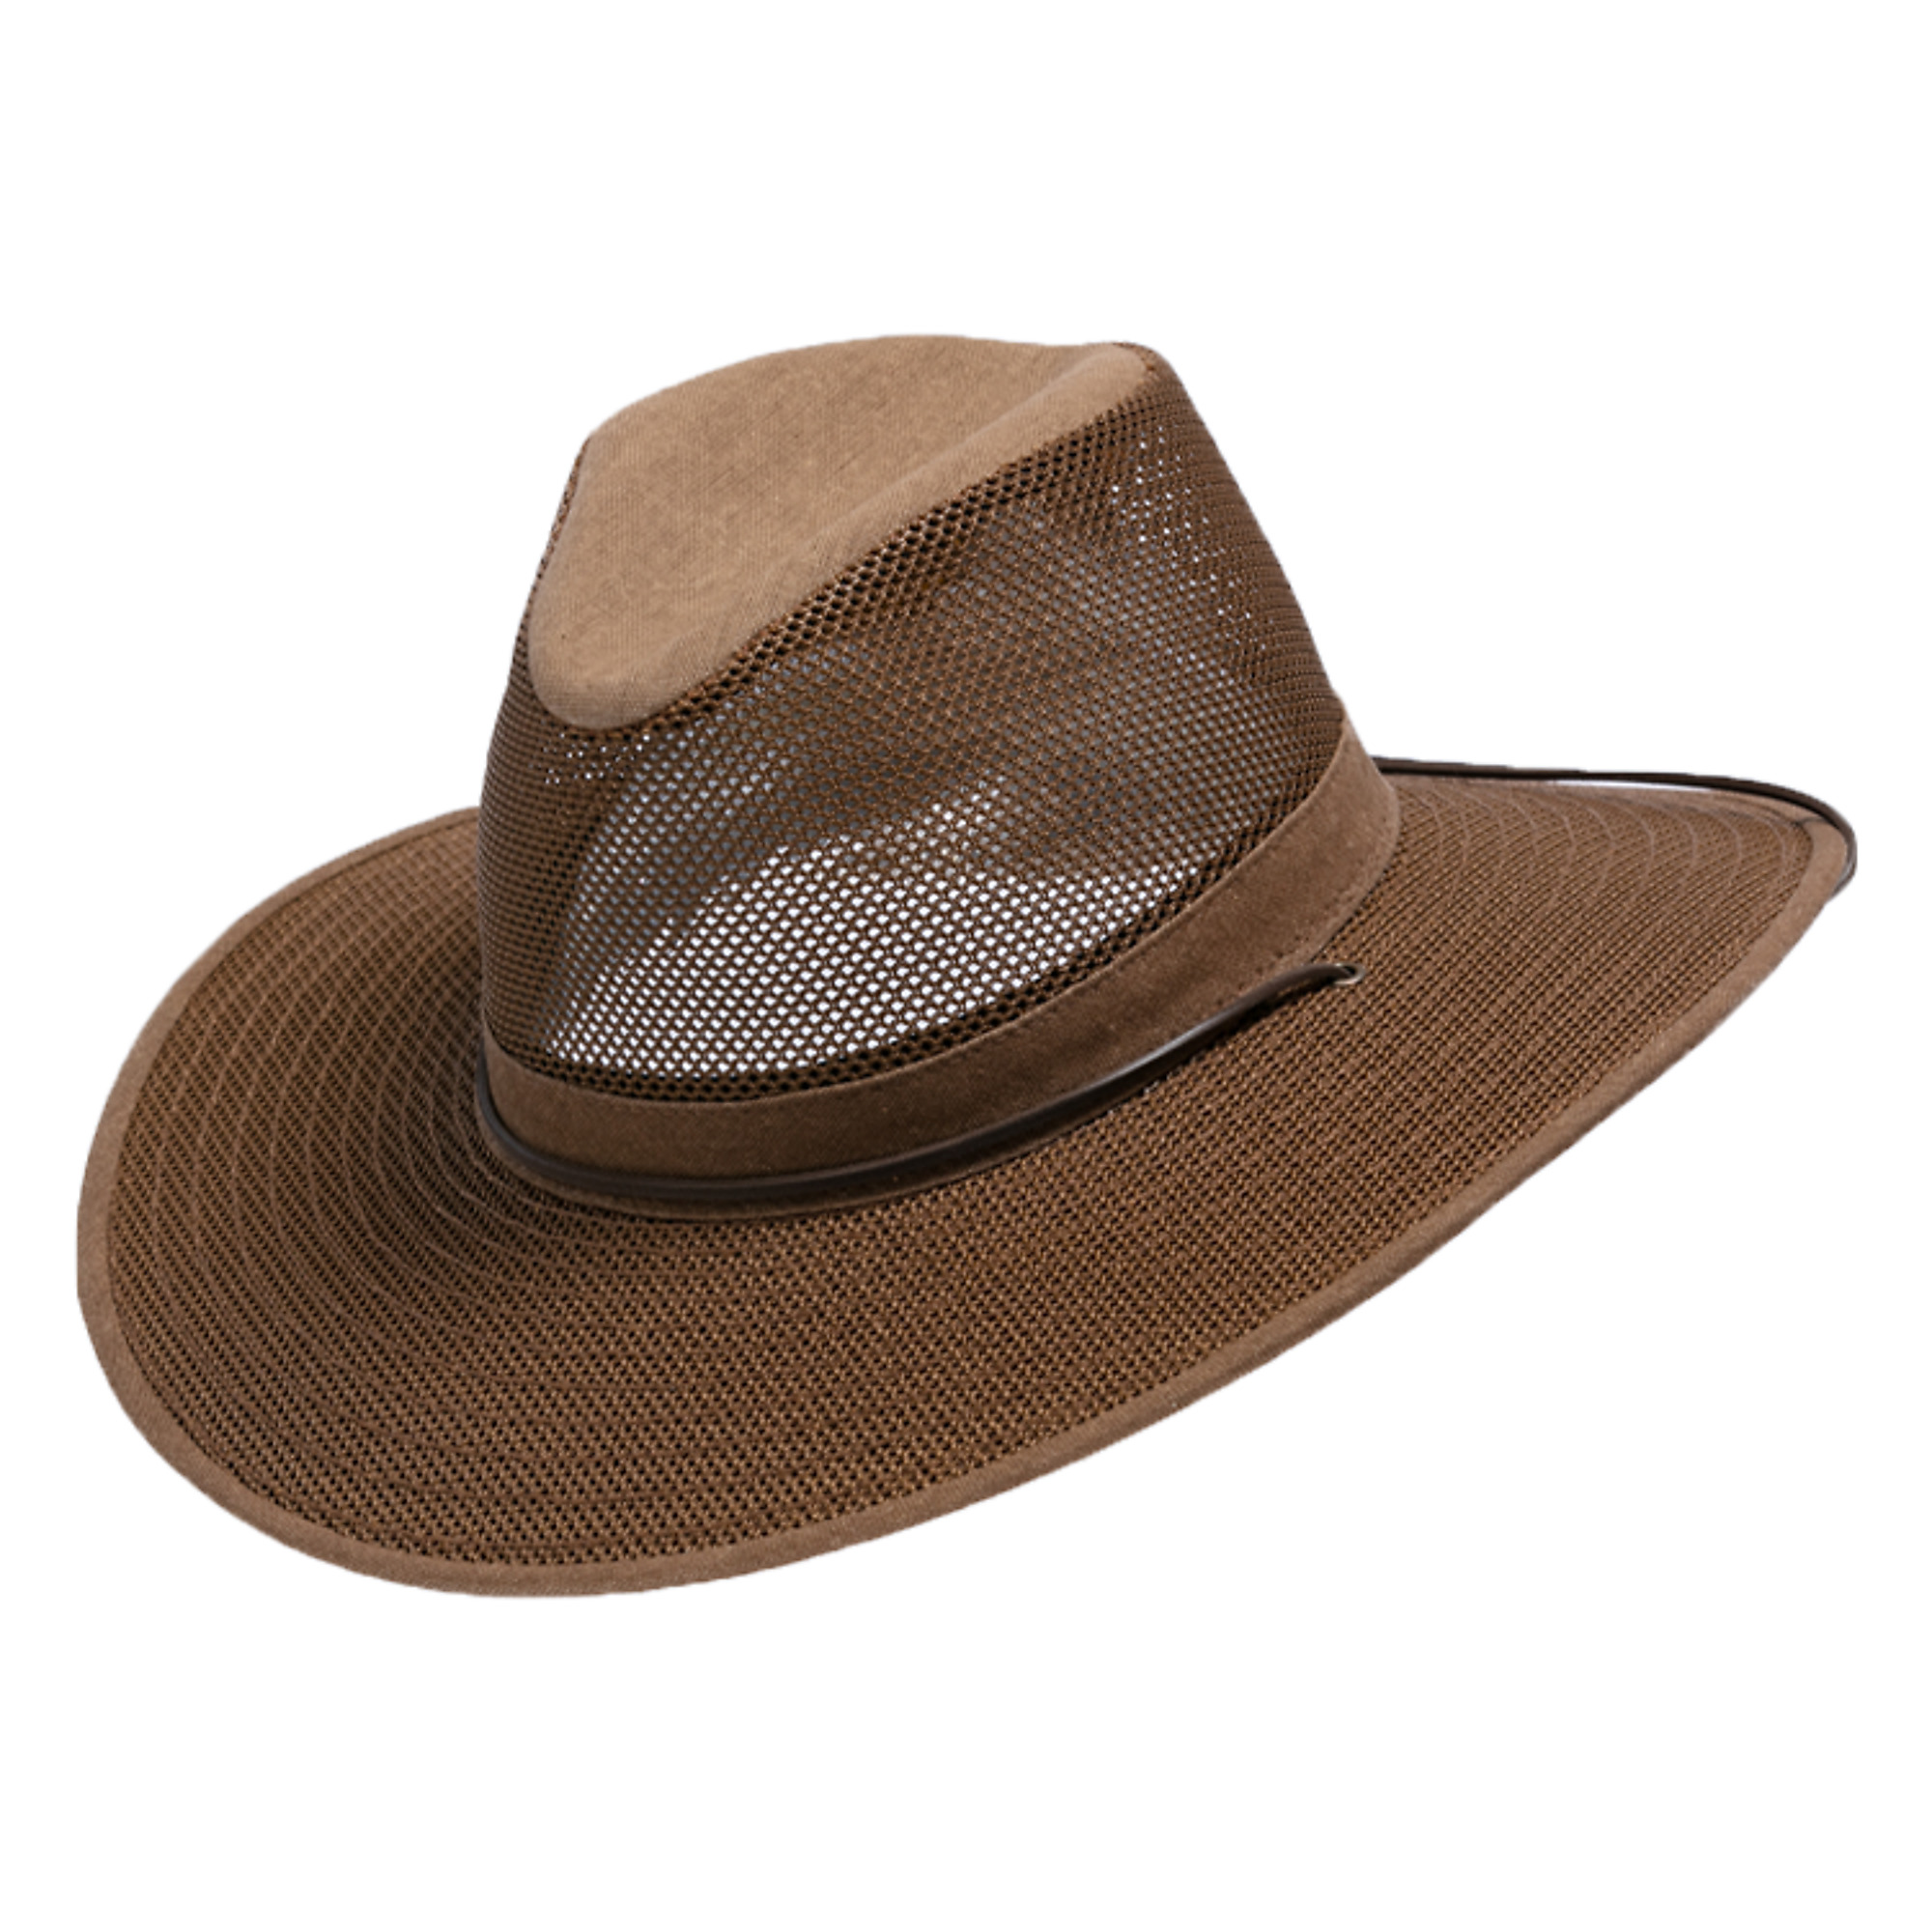 Henschel Hat Company, Earth Aussie Breezer Grande, Size M, Color Earth, Hat Style Hat, Model 5301-82M